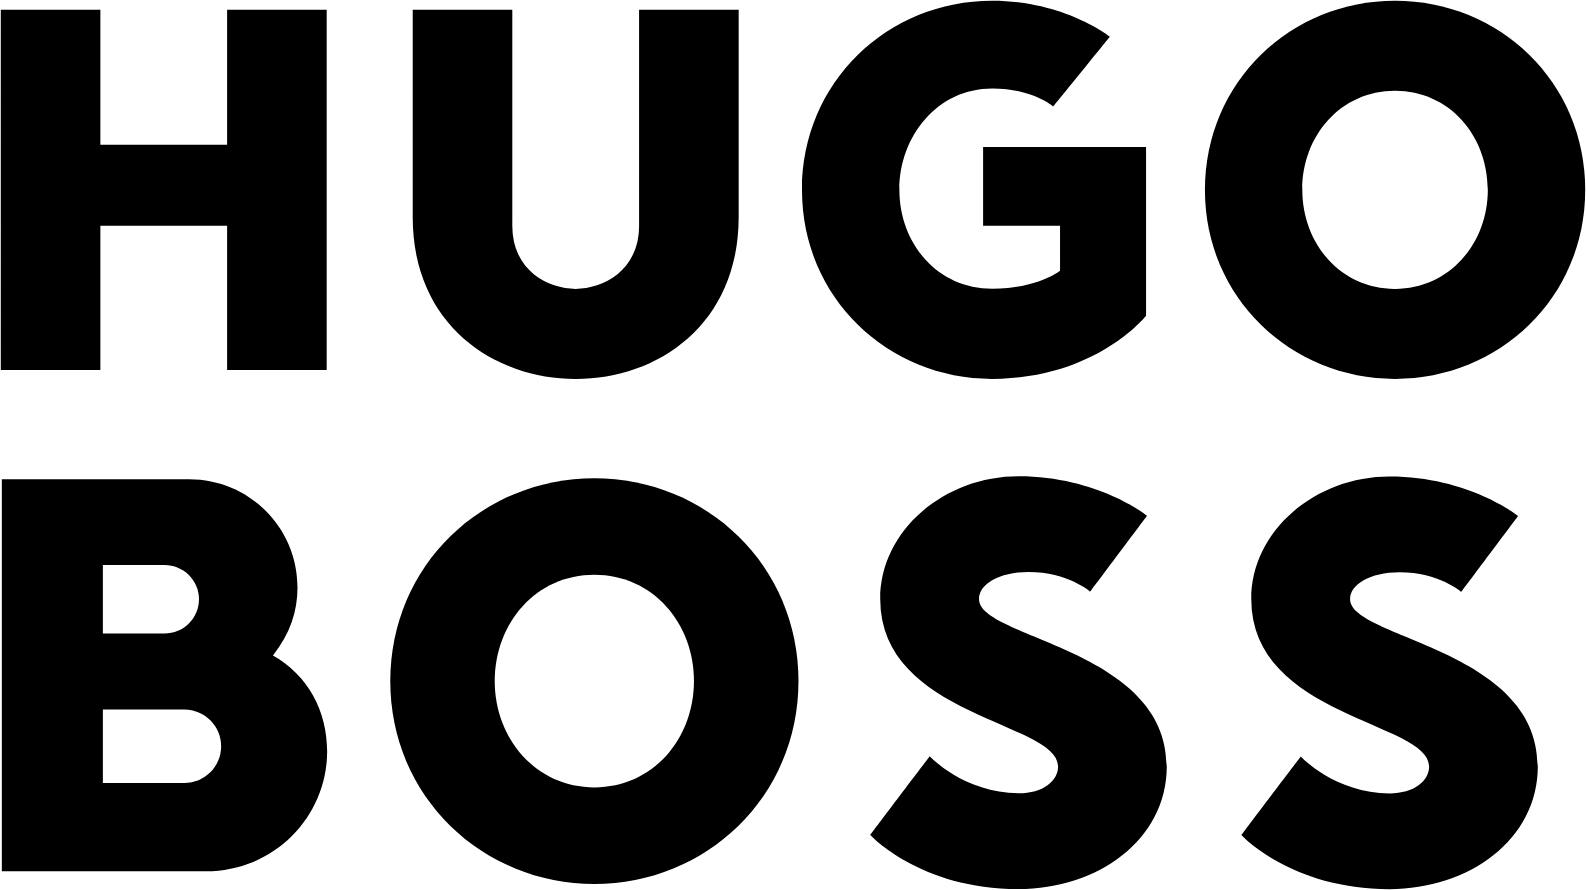 HUGO BOSS logo in transparent PNG format